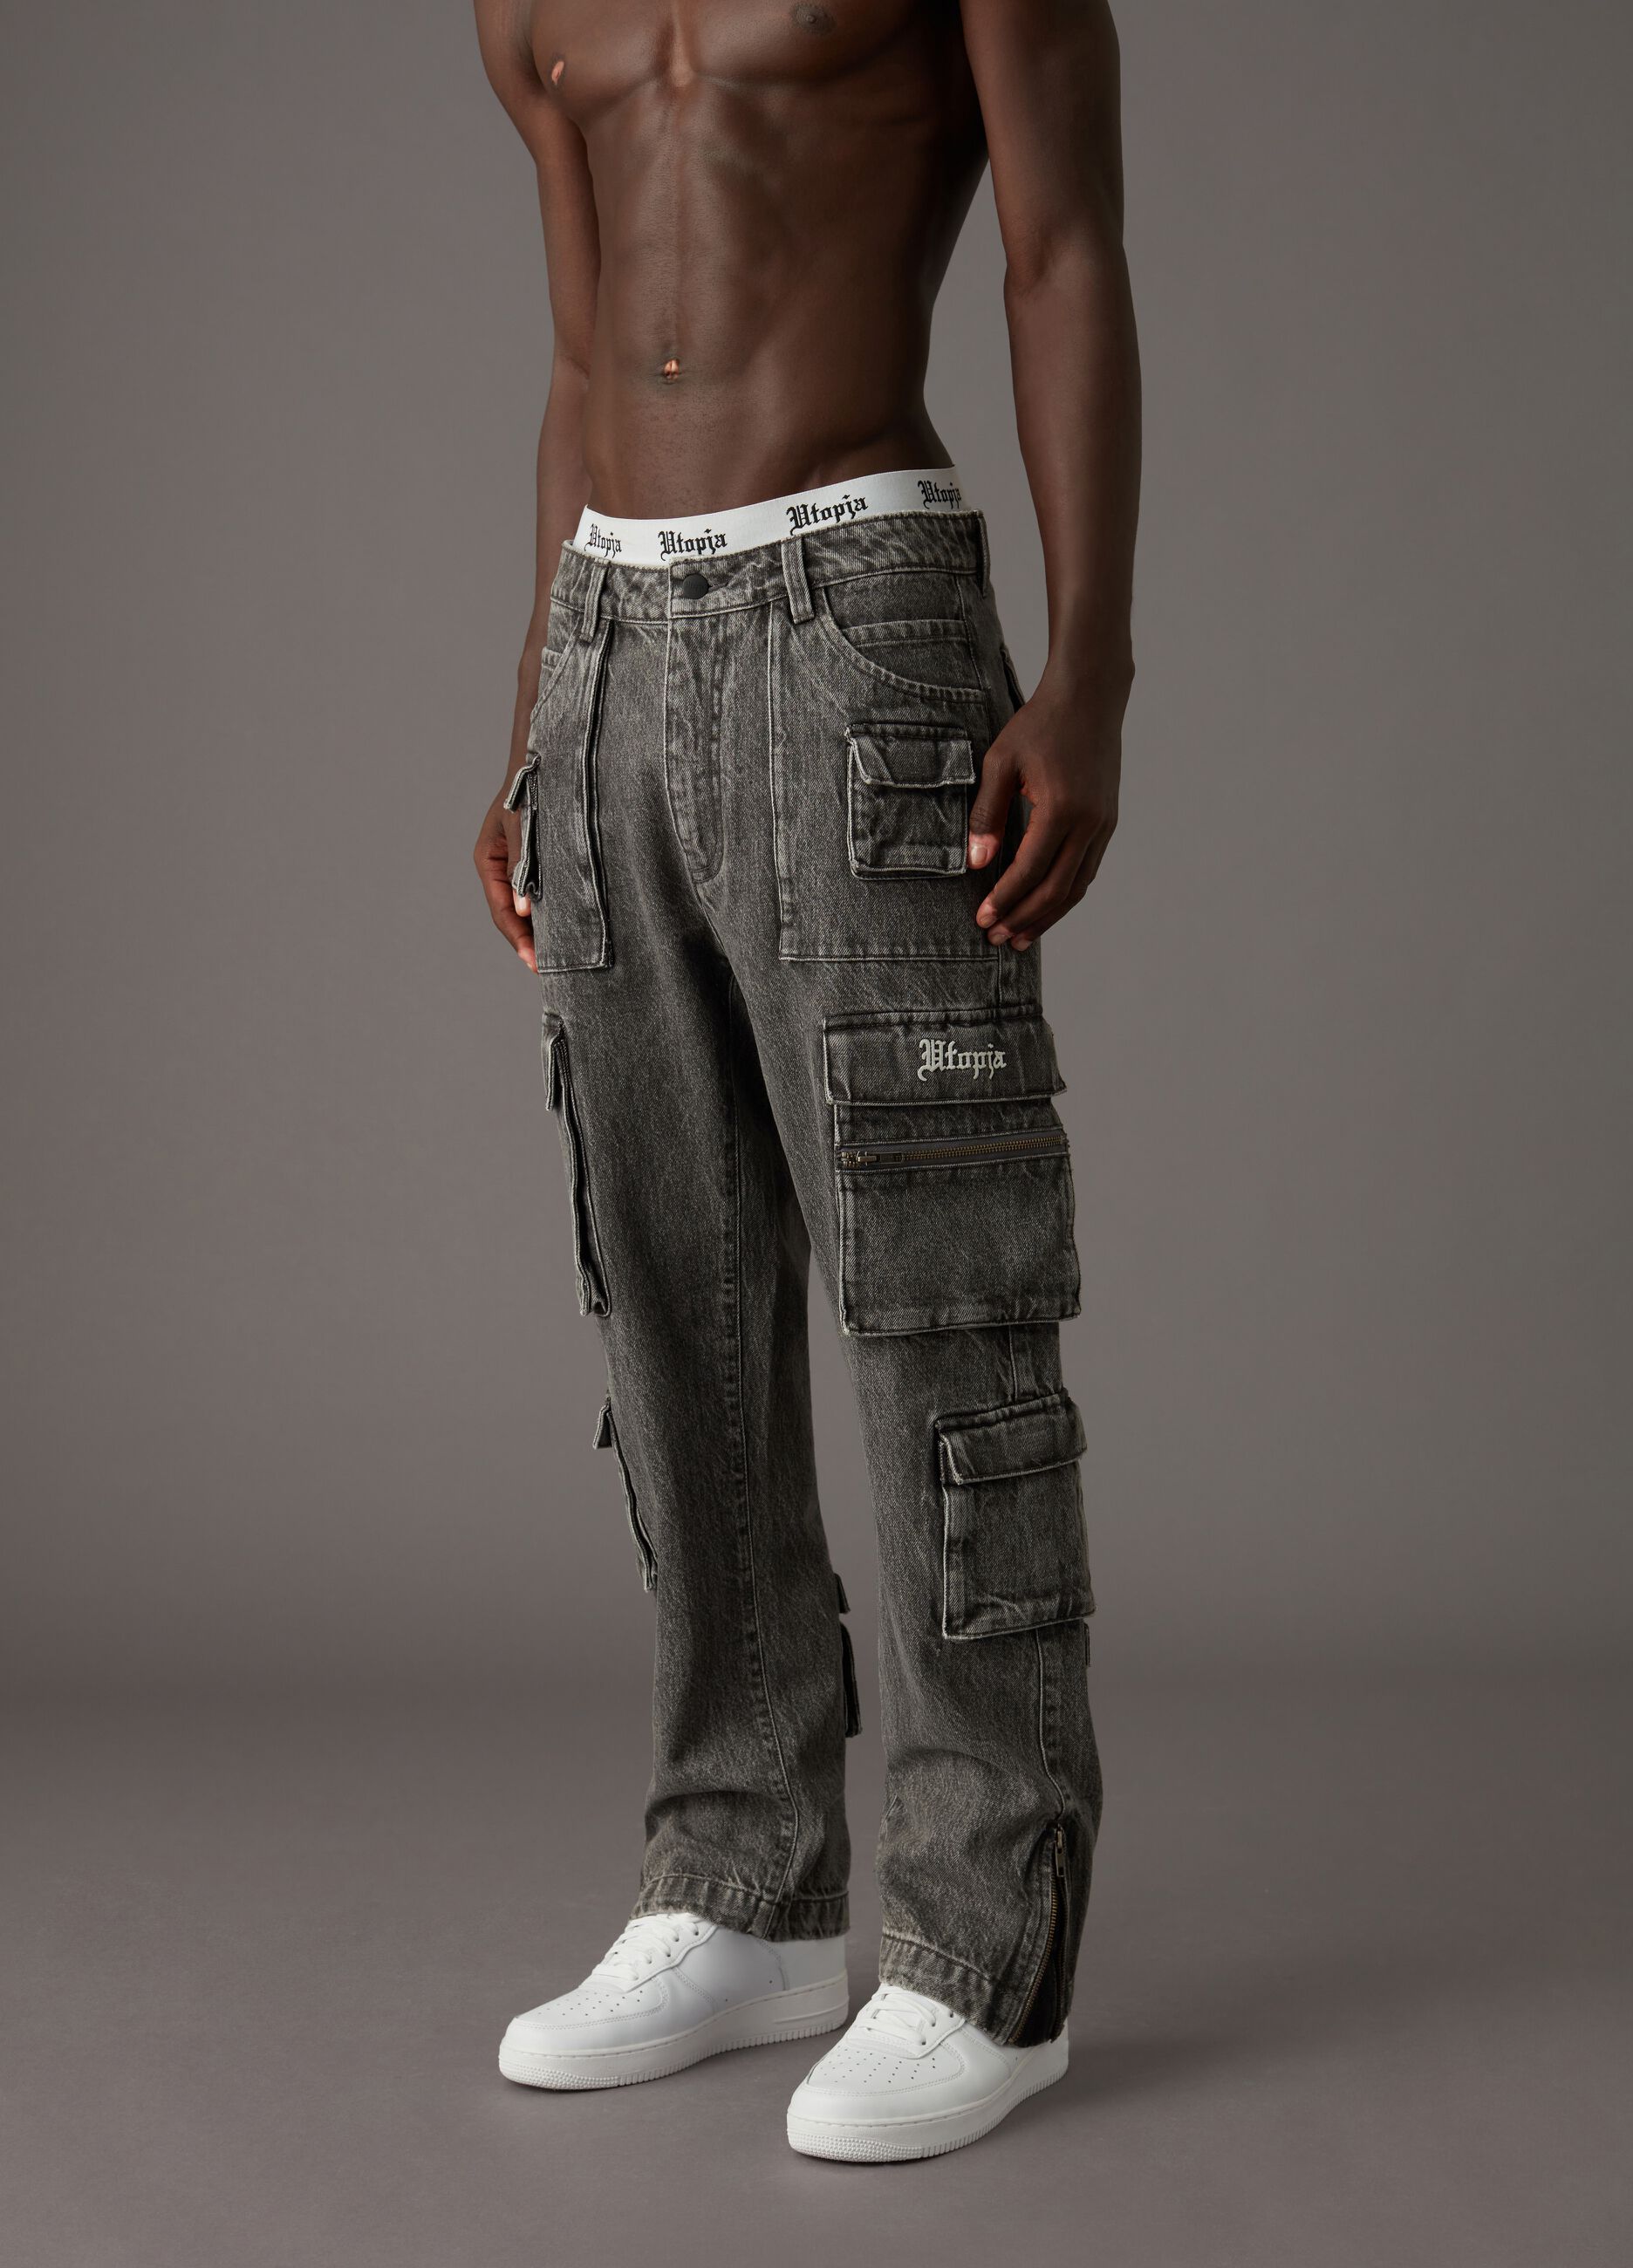 ASOS Men's Topman relaxed nylon multi pocket cargo pants in black size W34  X L30 | eBay